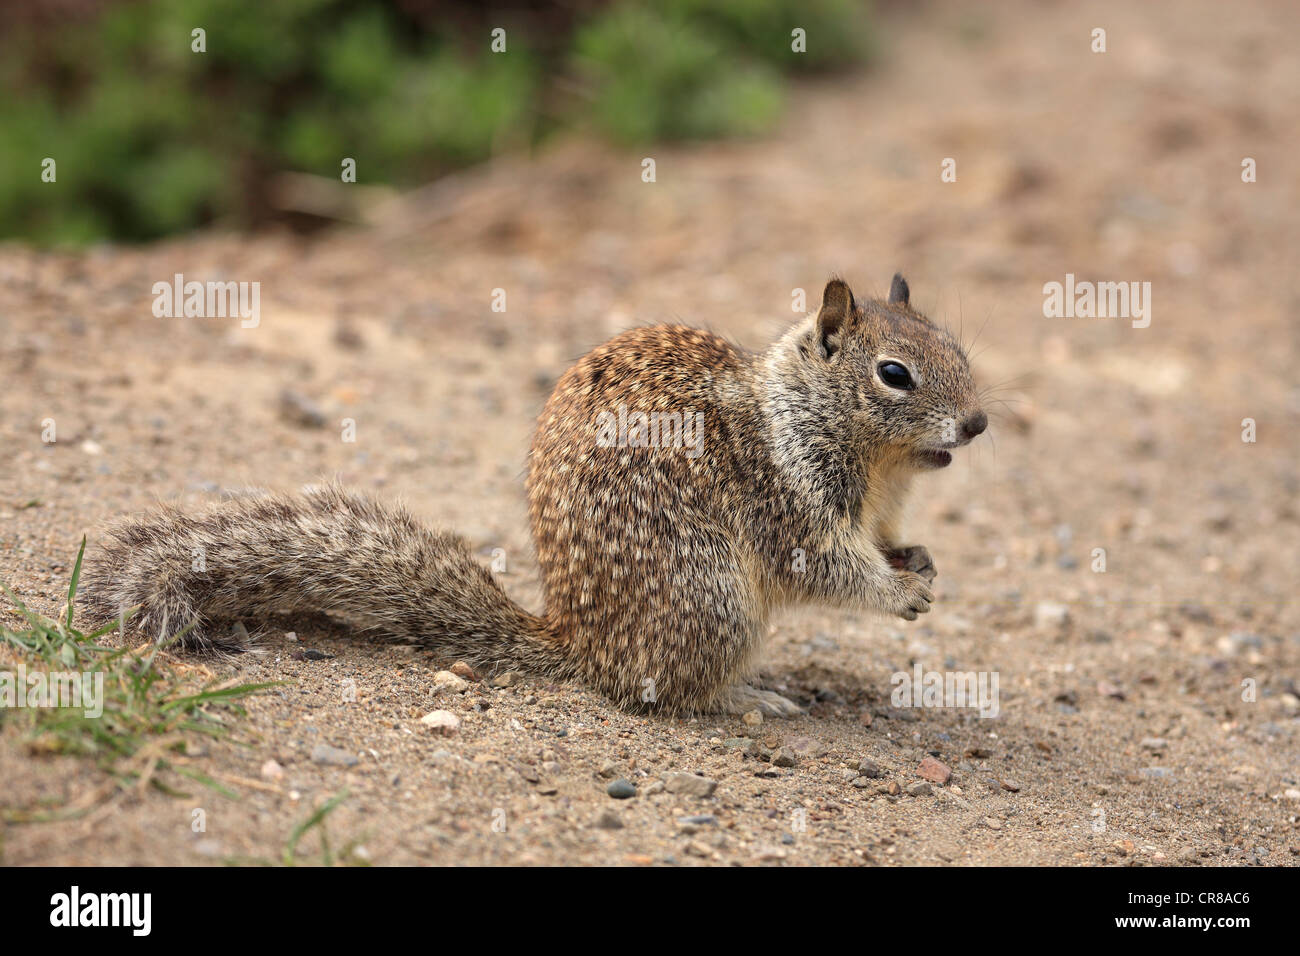 California ground squirrel (Spermophilus beecheyi), adult, alert, Monterey, California, USA, America Stock Photo